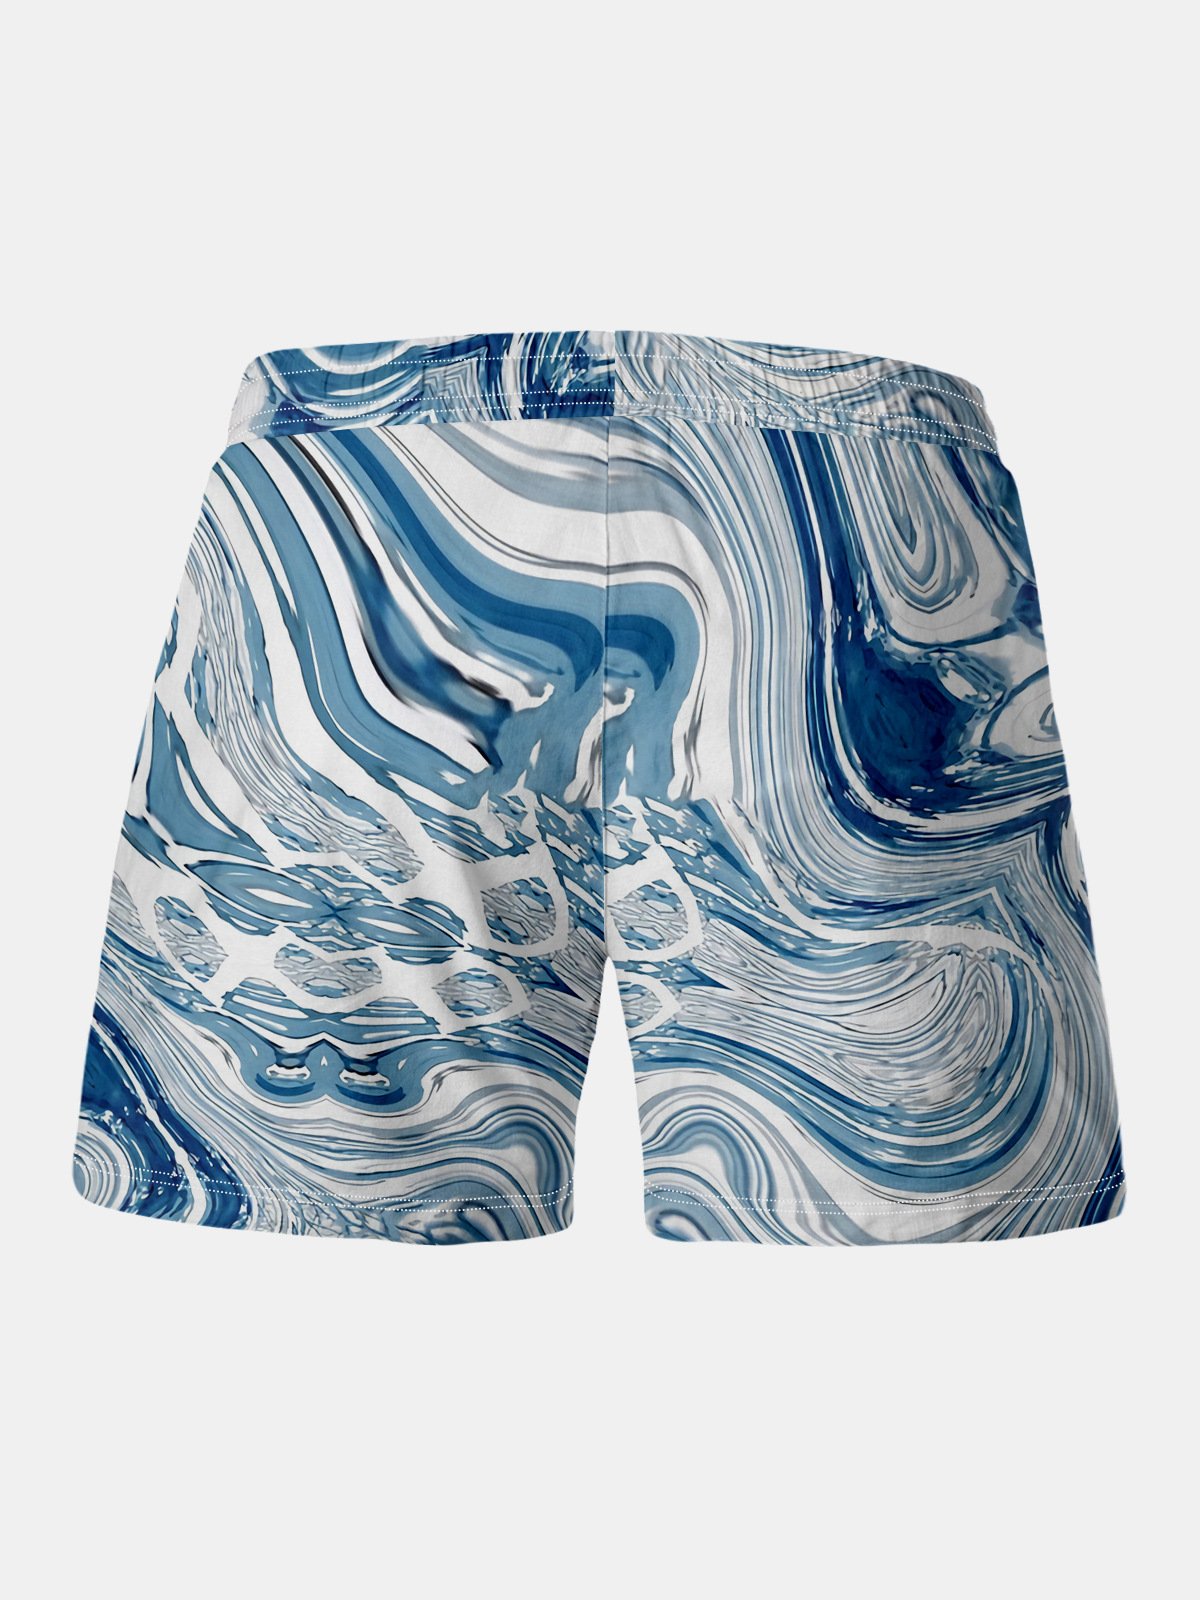 Abstract Geometric Drawstring Beach Shorts